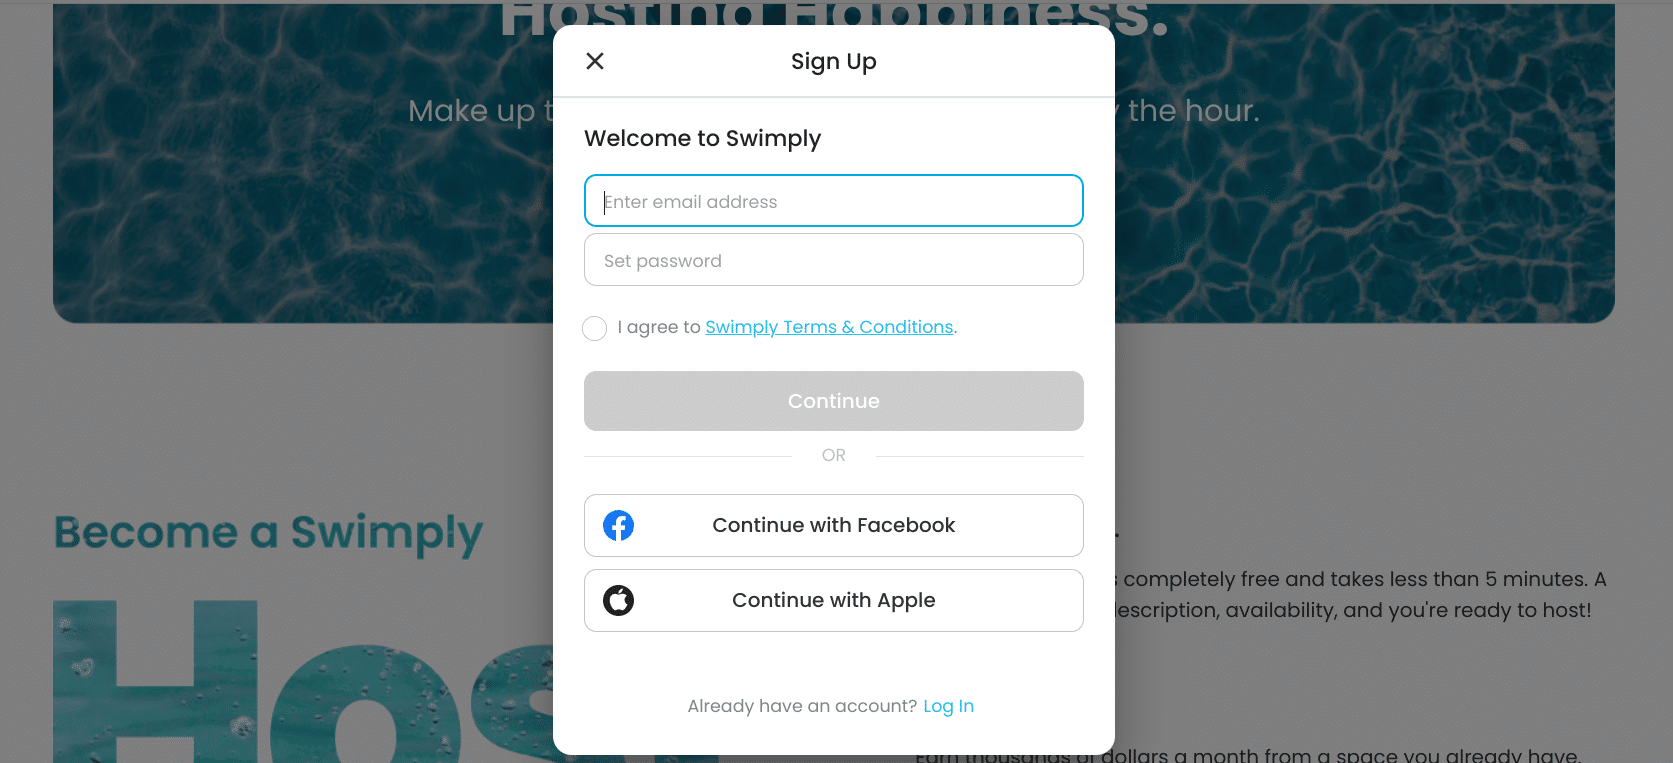 Screenshot of Swimply's registration pop-up